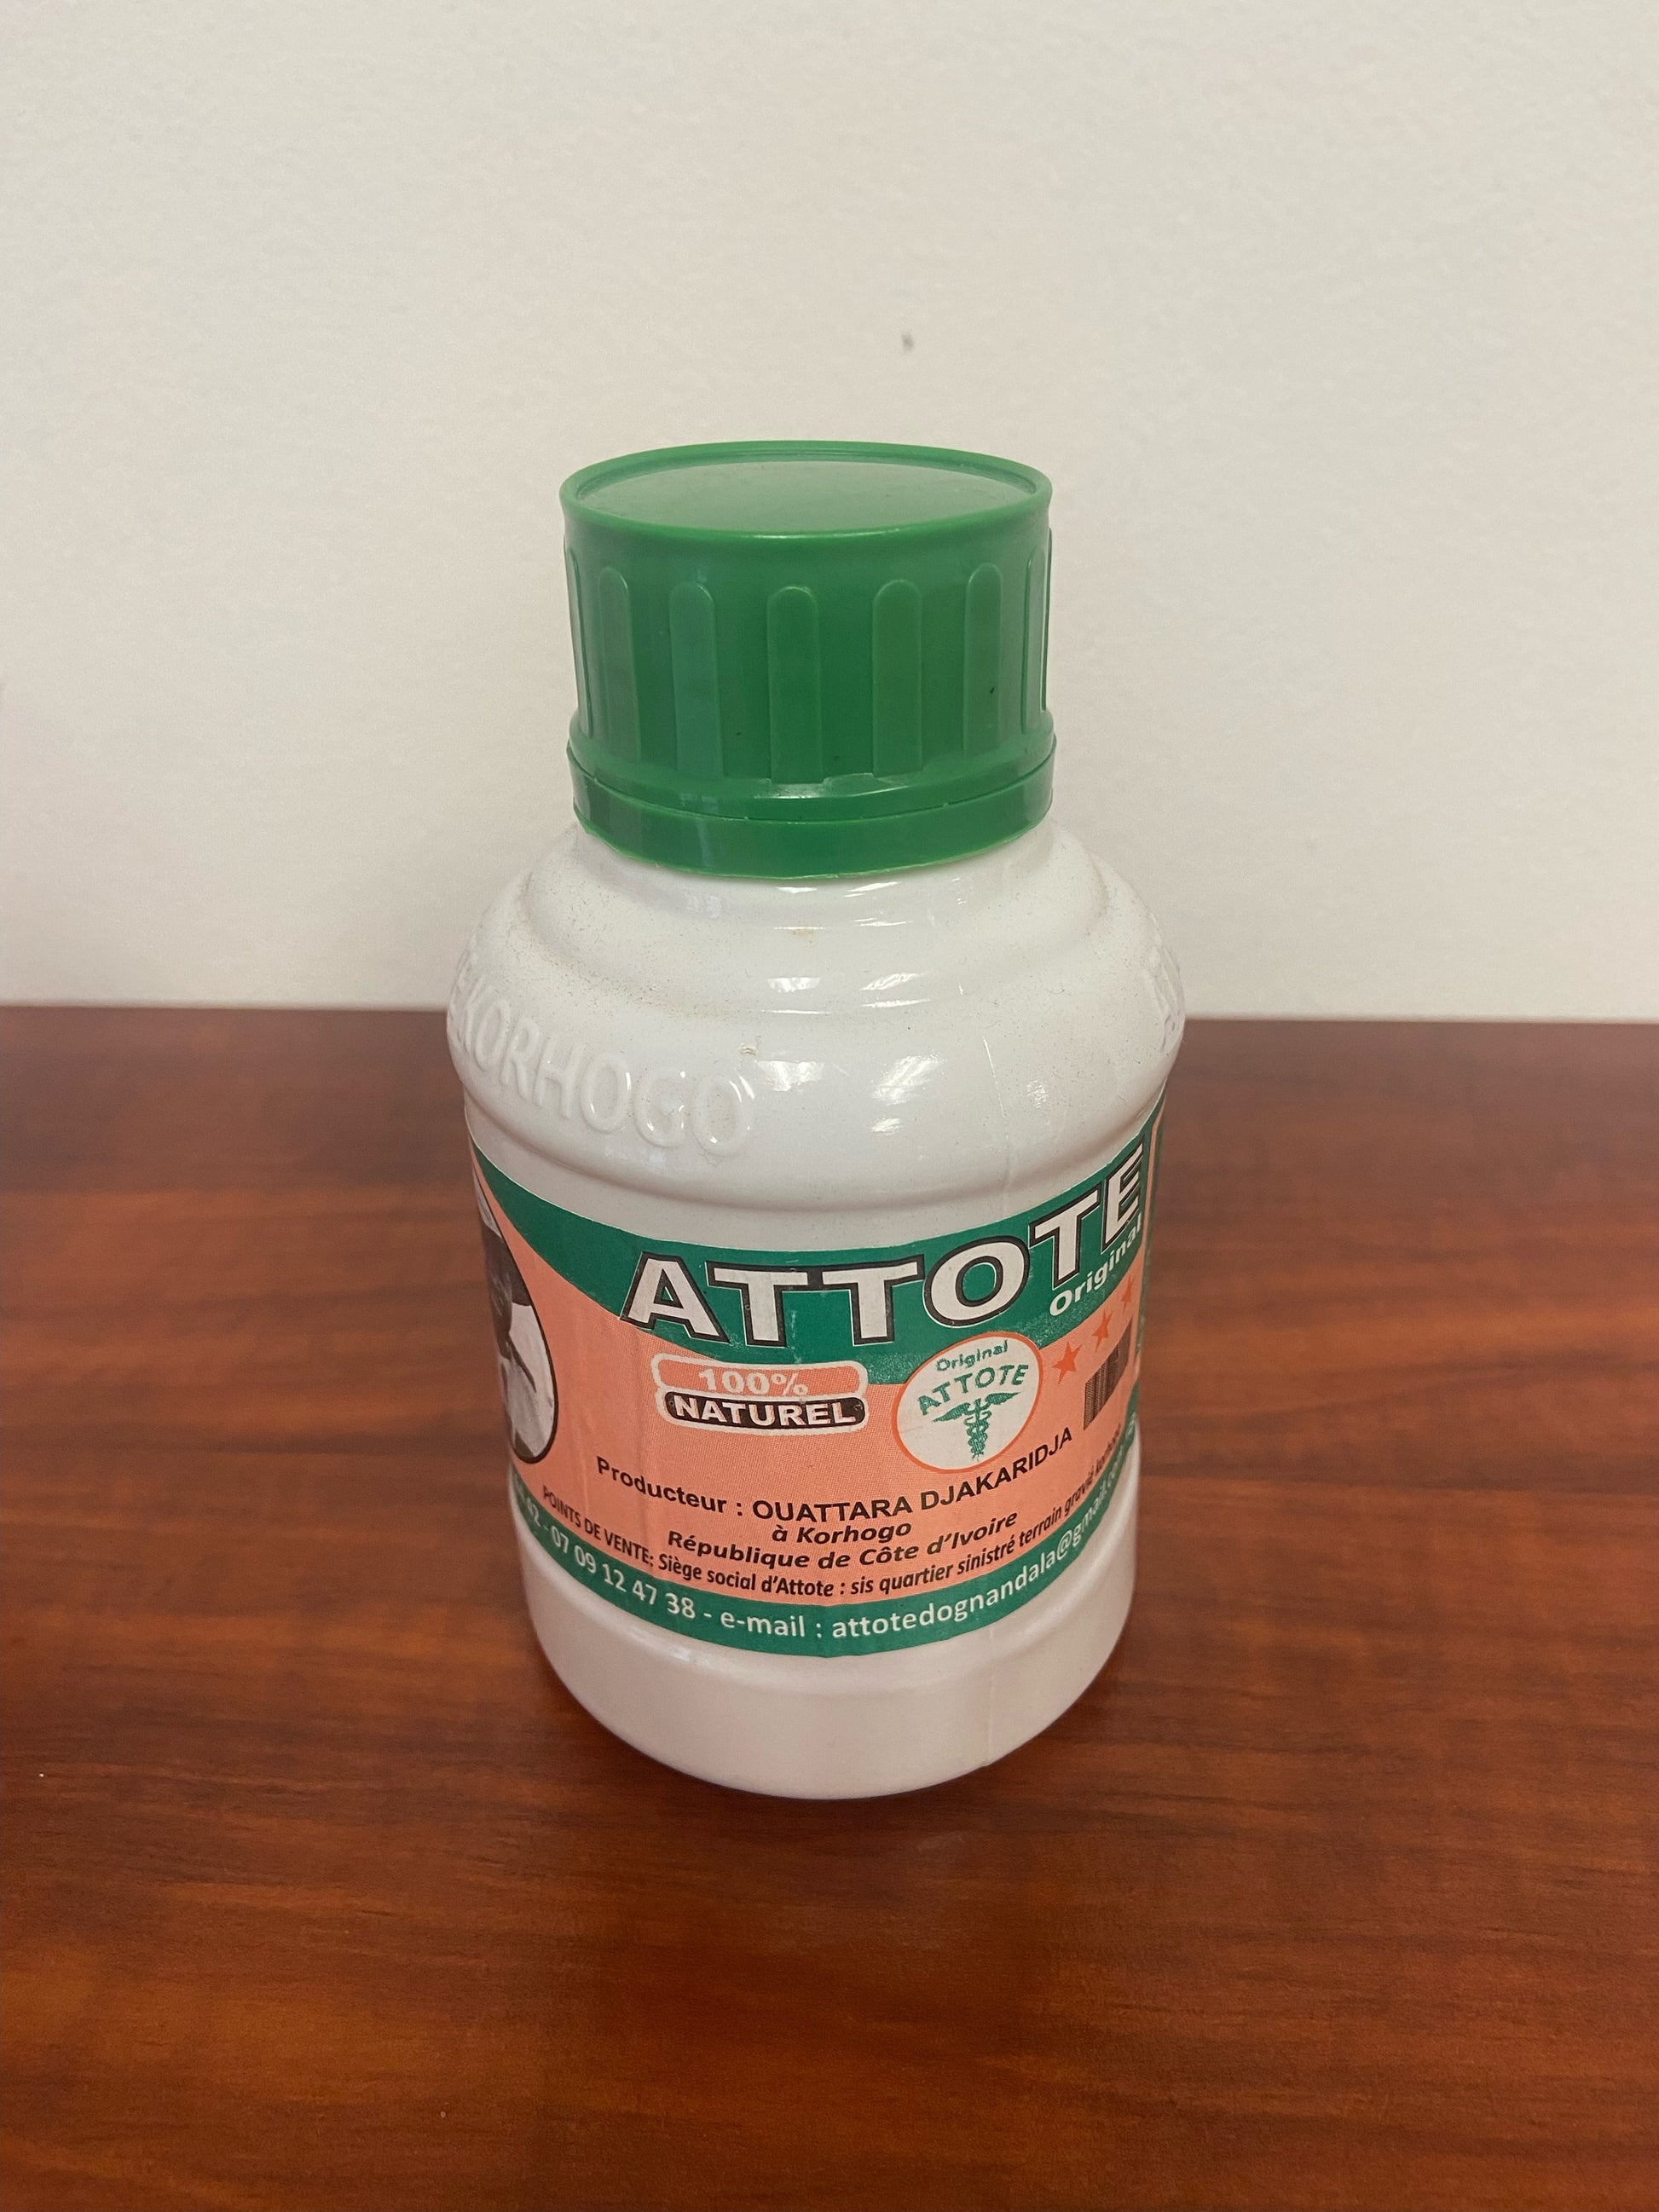 Attote Original – Main Street Tonics & Cuisine